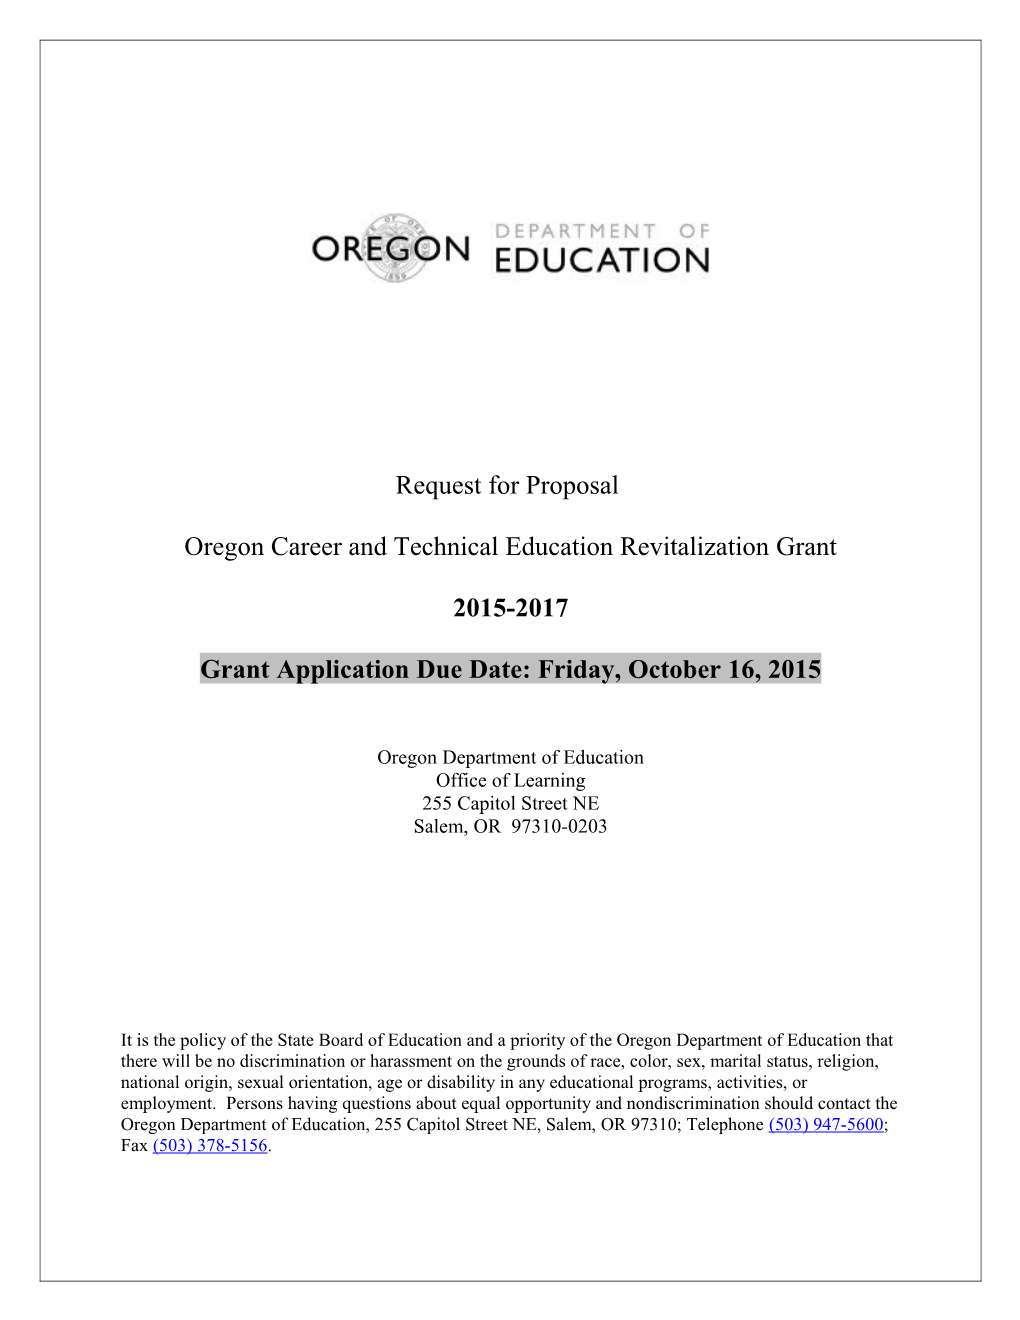 Oregon Career and Technical Education Revitalization Grant